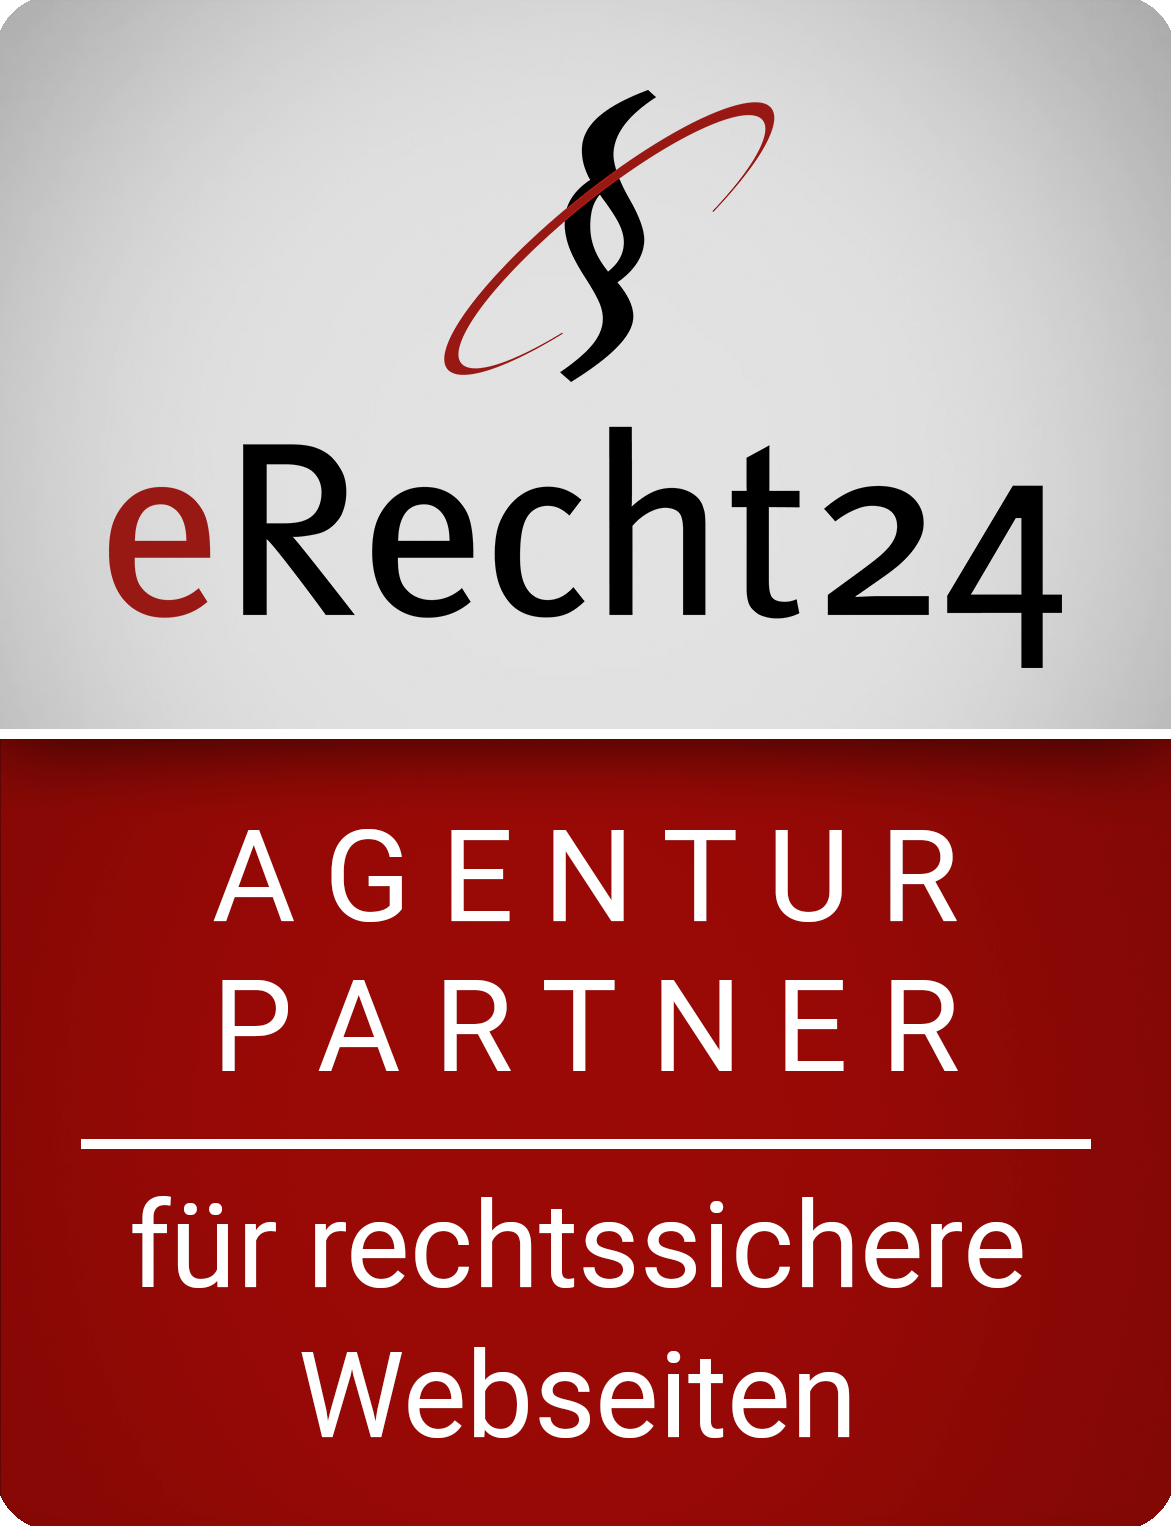 erecht24-siegel-agenturpartner